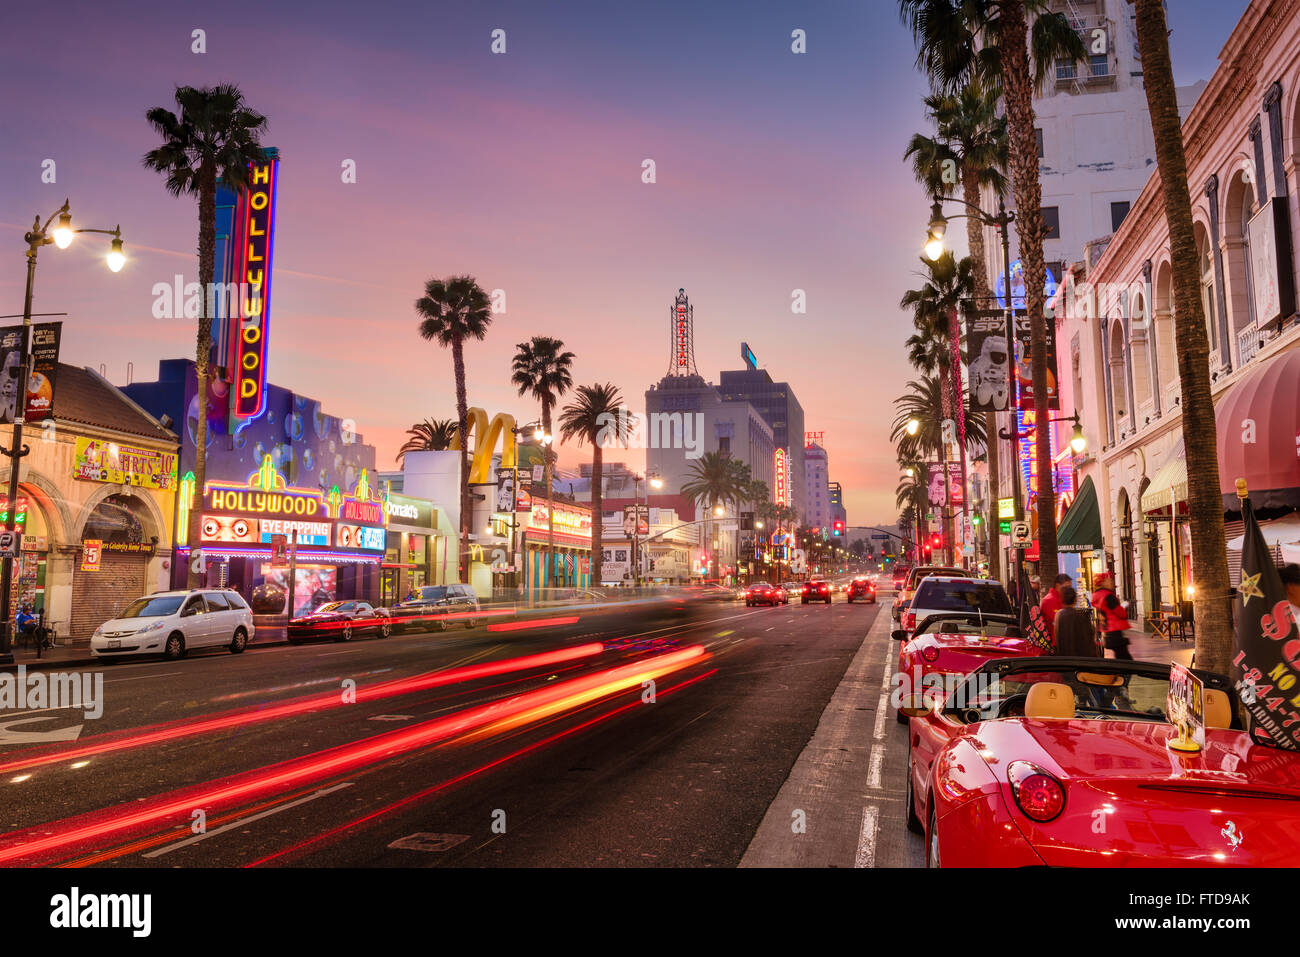 Trafic sur Hollywood Boulevard à Hollywood, Californie, USA. Banque D'Images